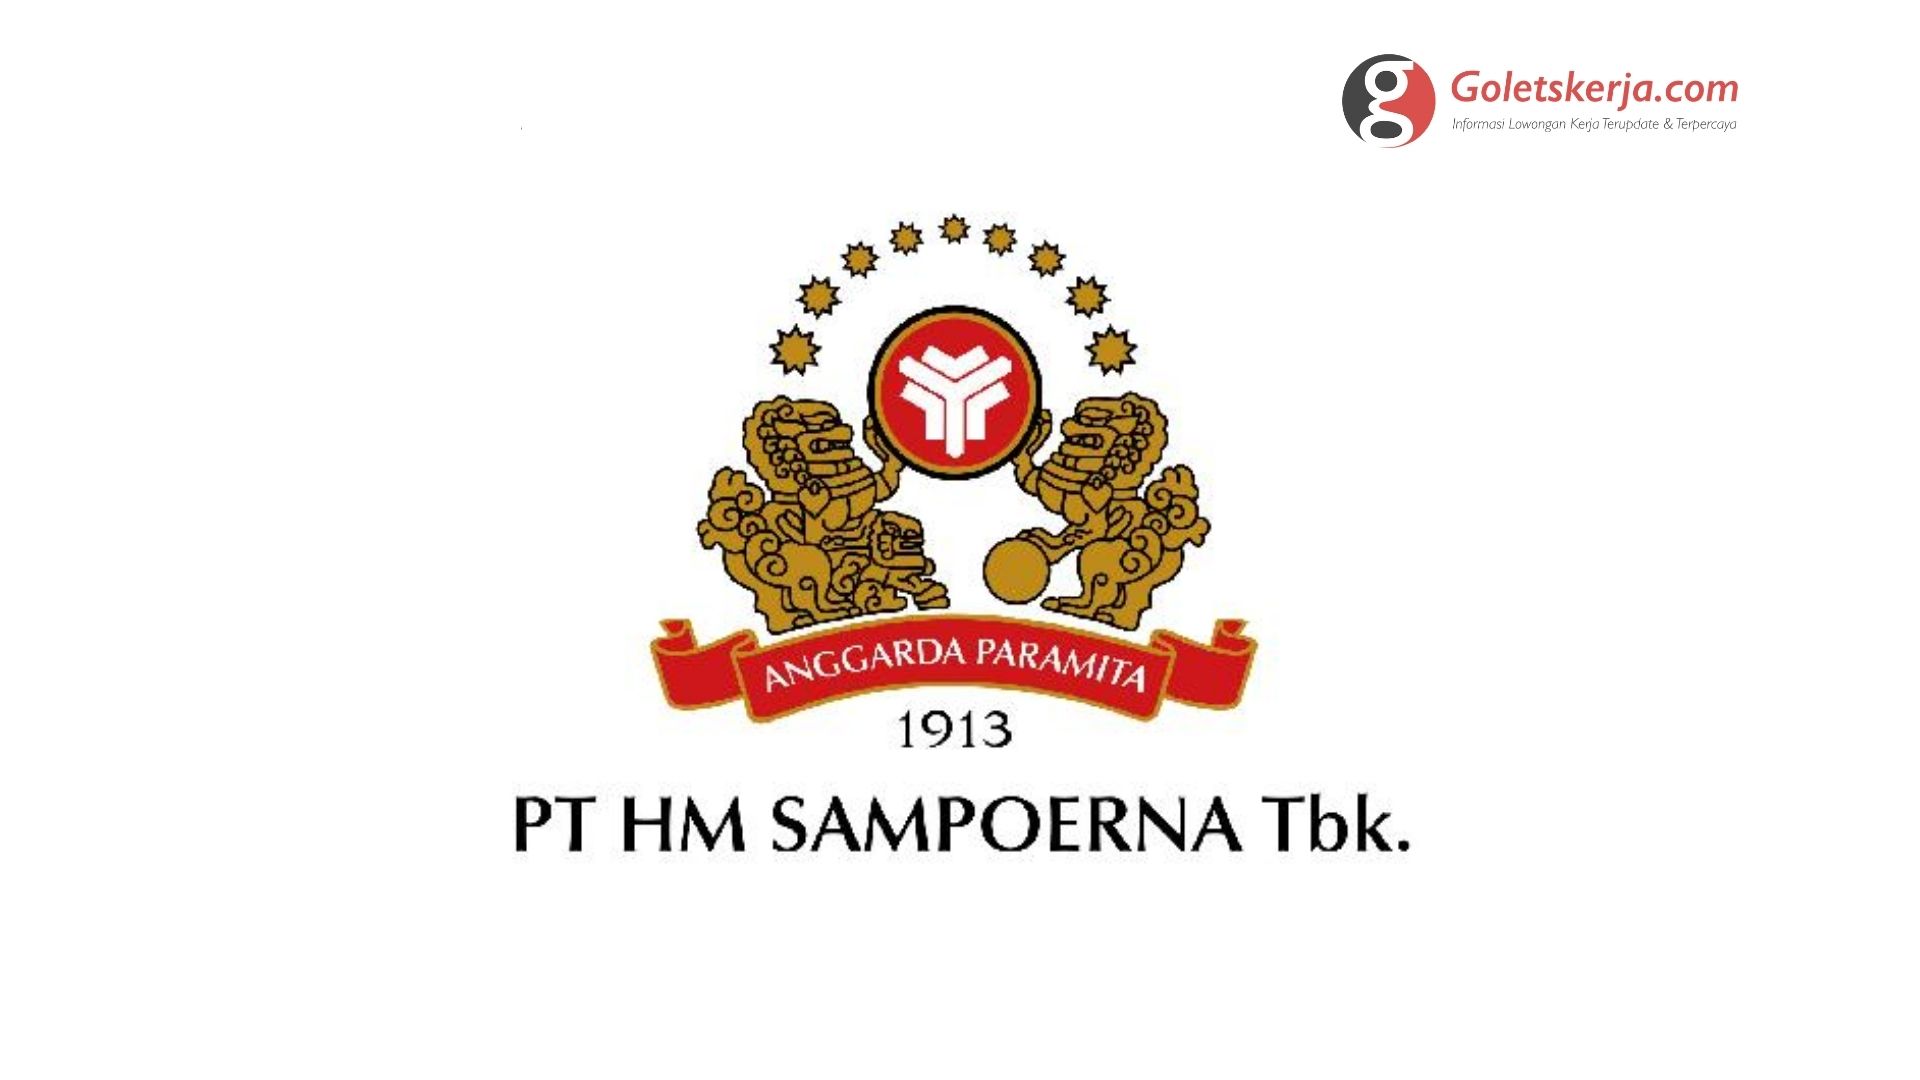 Recruitment PT HM Sampoerna Tbk 